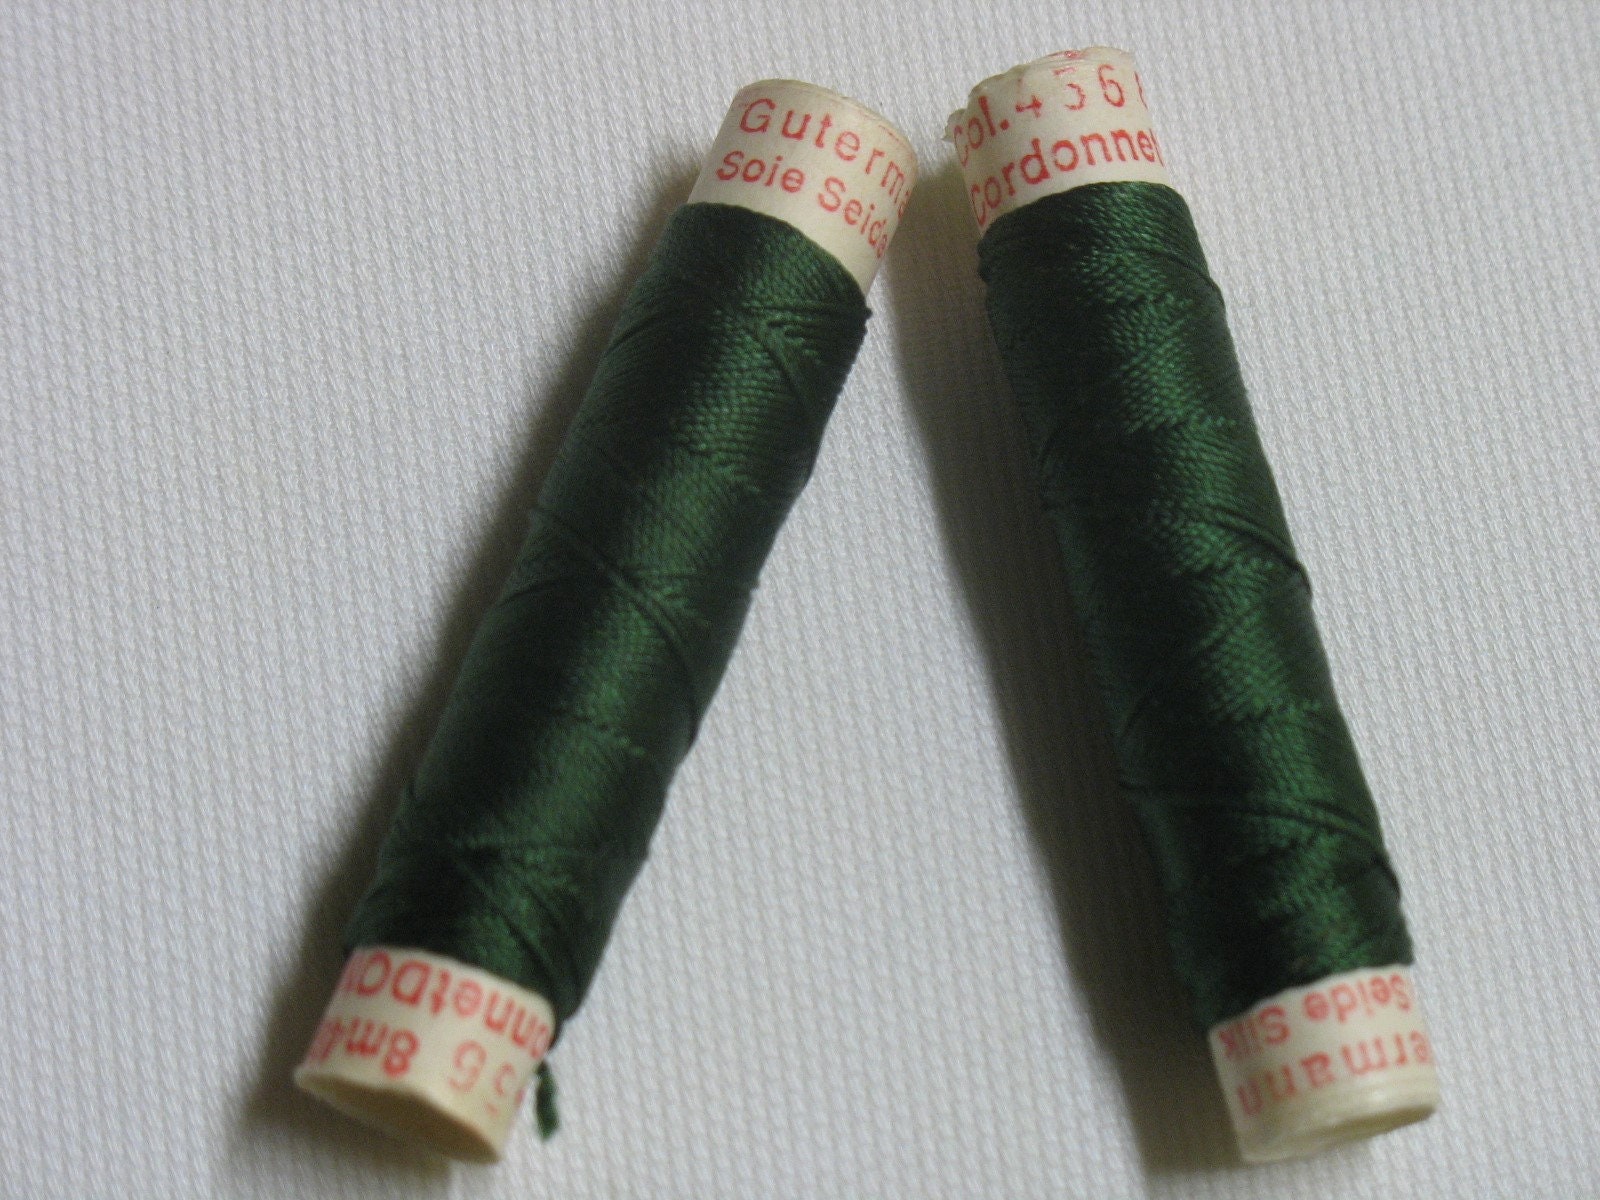 369 Burgundy 100m Gutermann Silk Thread - Silk Thread - Threads - Notions